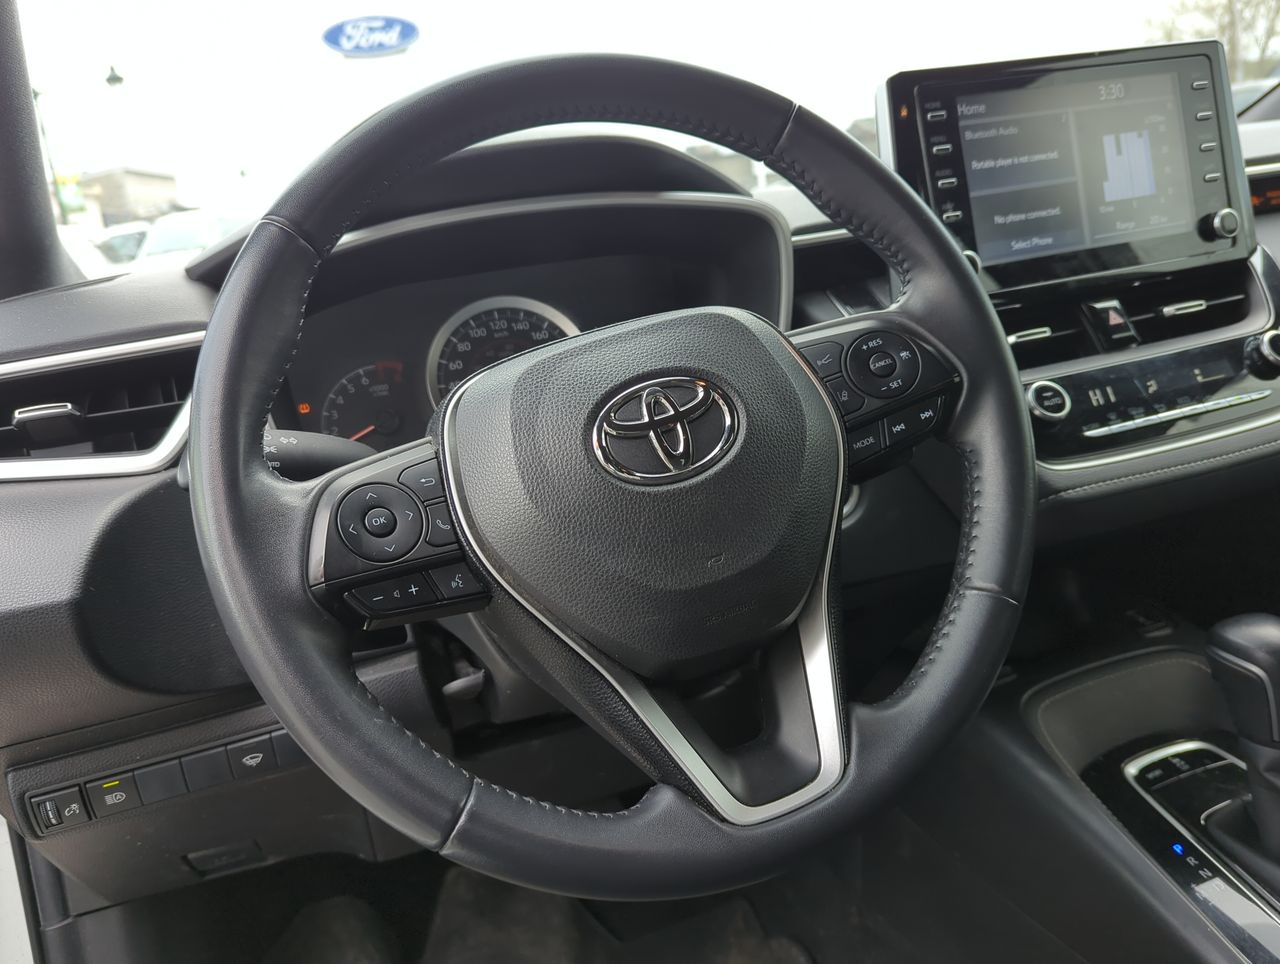 2019 Toyota Corolla Hatchback - 21833A Full Image 6